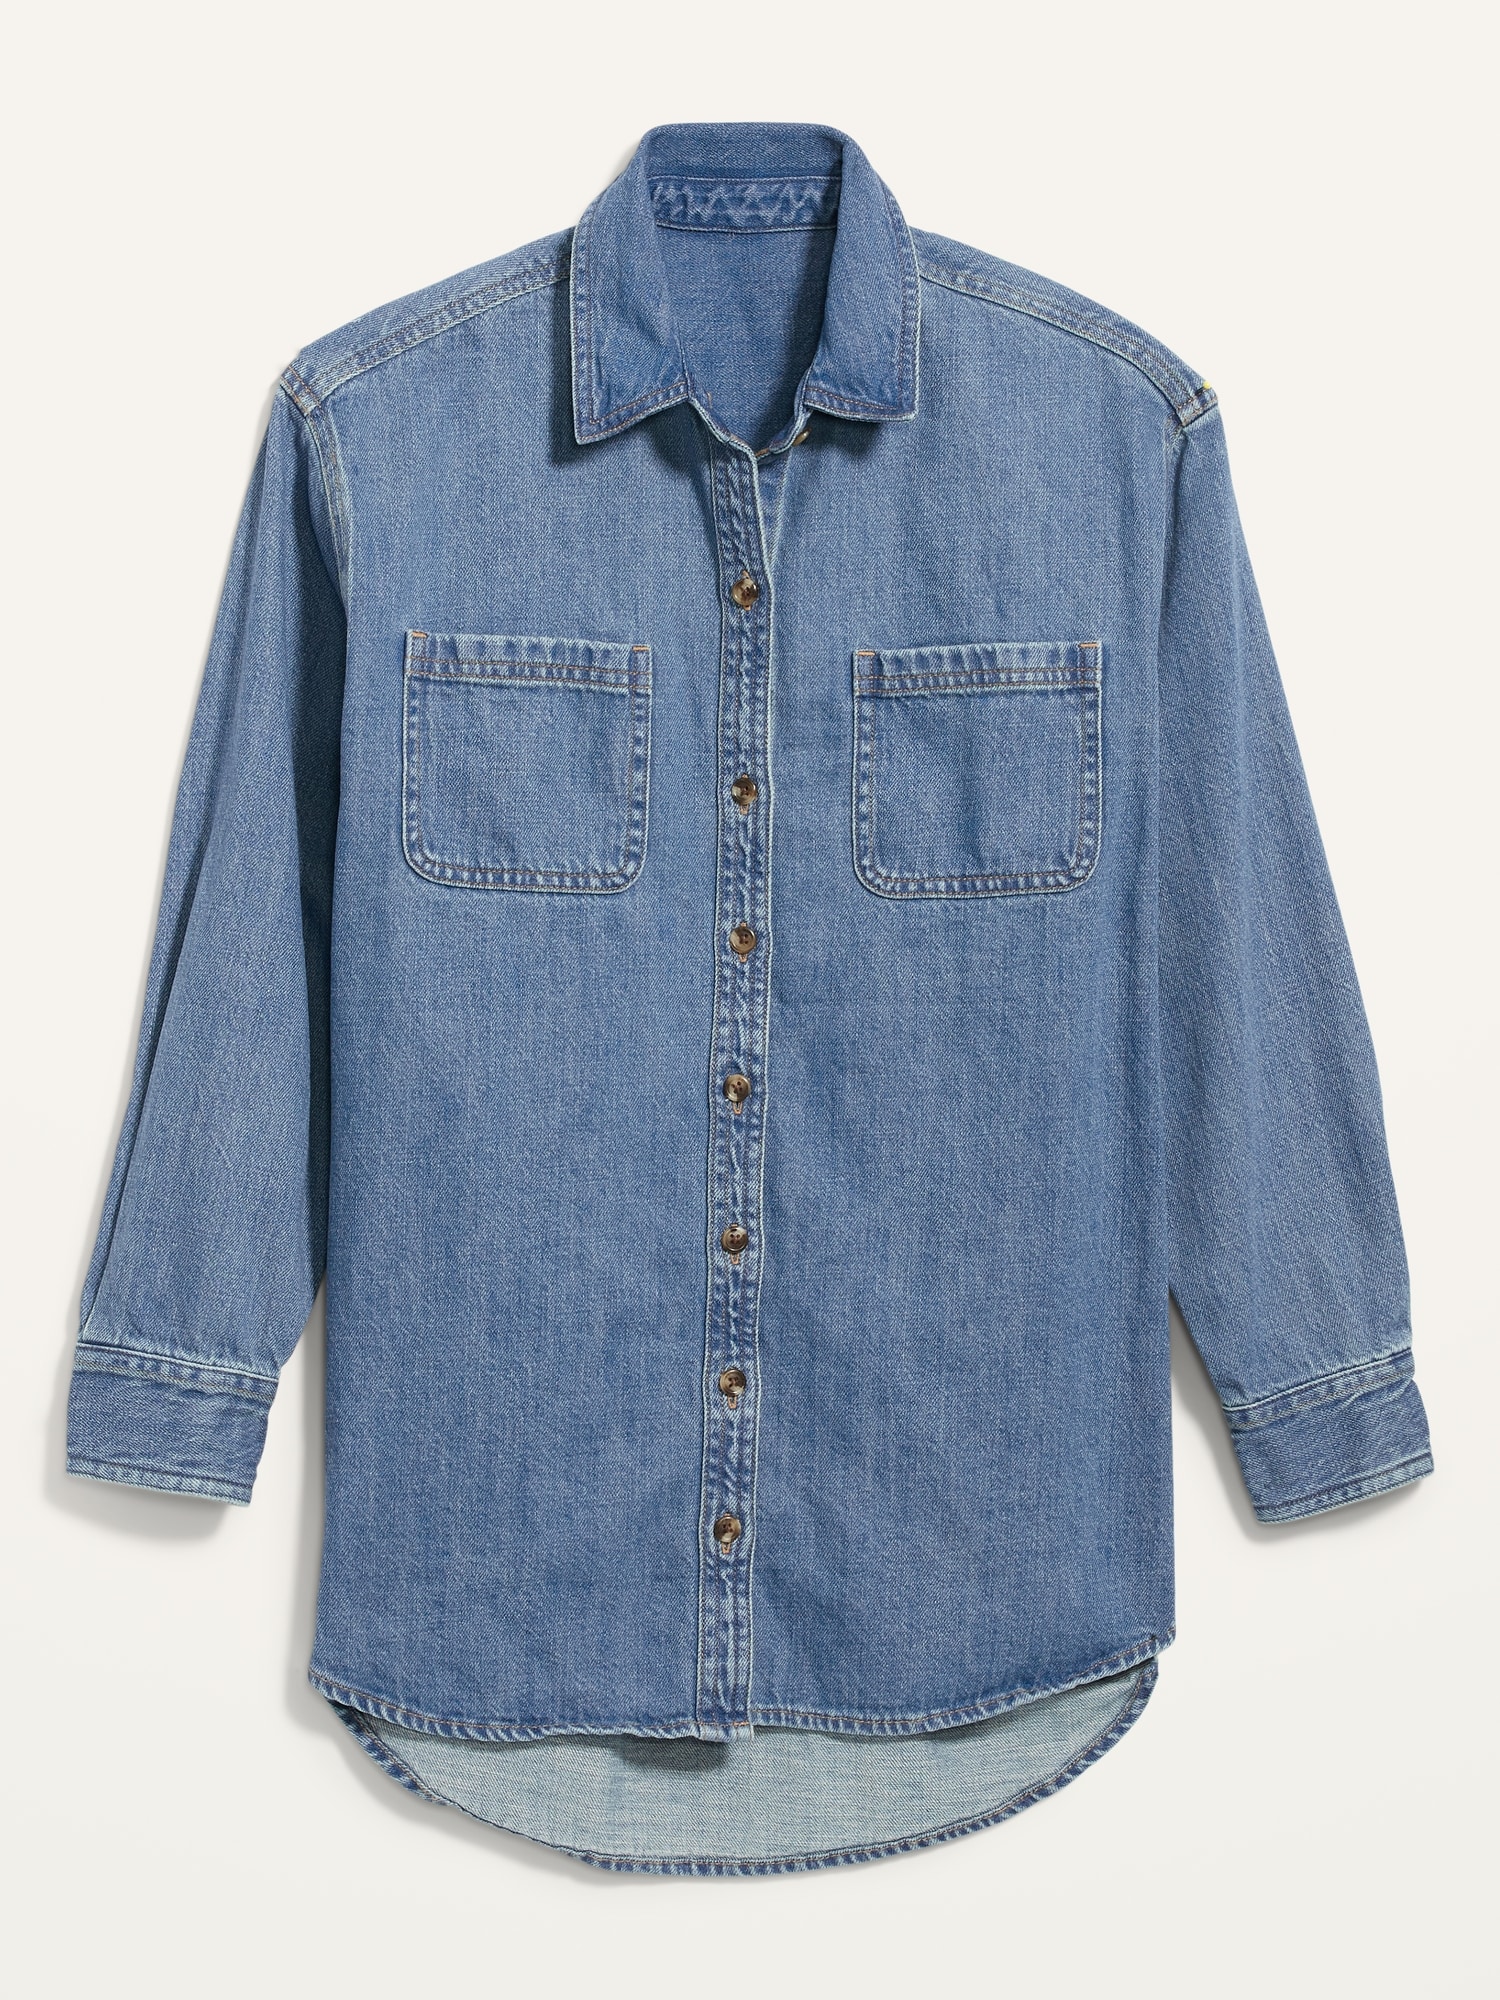 Wrangler Authentic Western Shirt - Stonewash Blue — Dave's New York